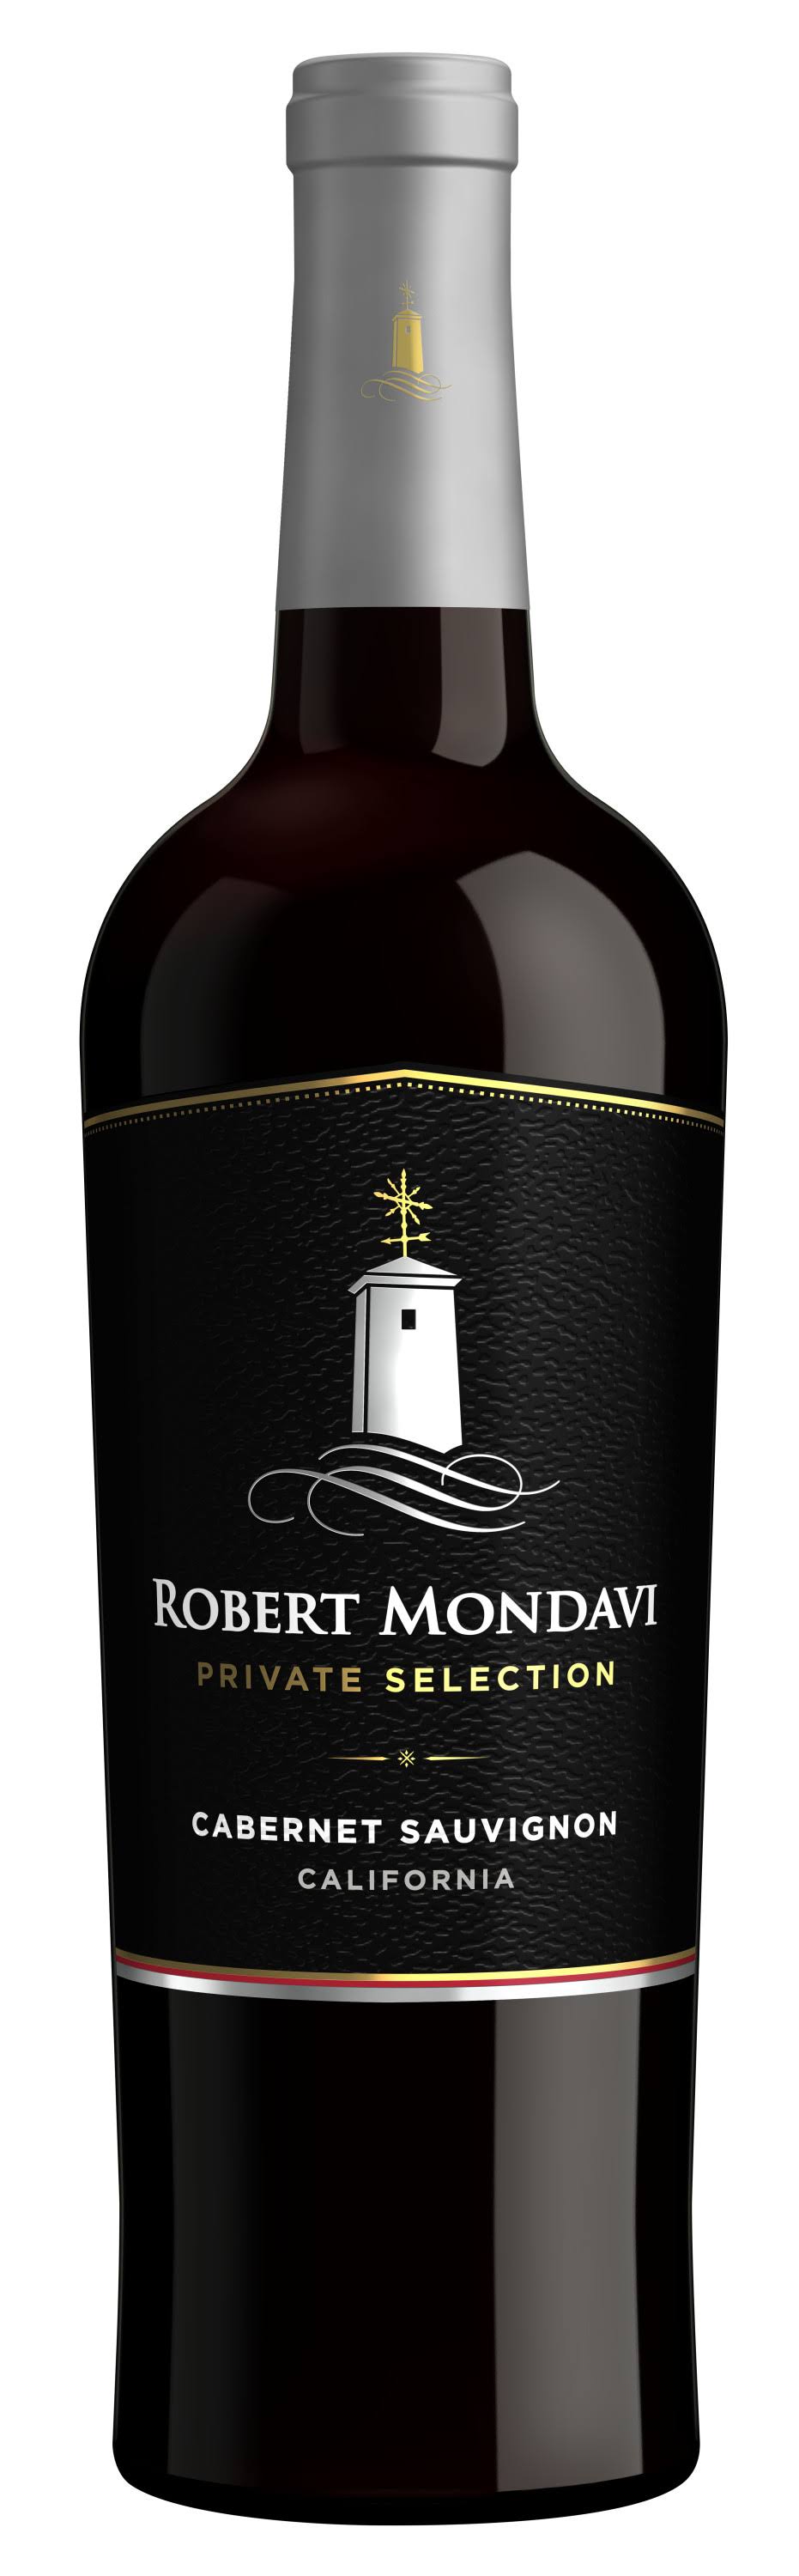 Robert Mondavi Private Selection Cabernet Sauvignon -750ml